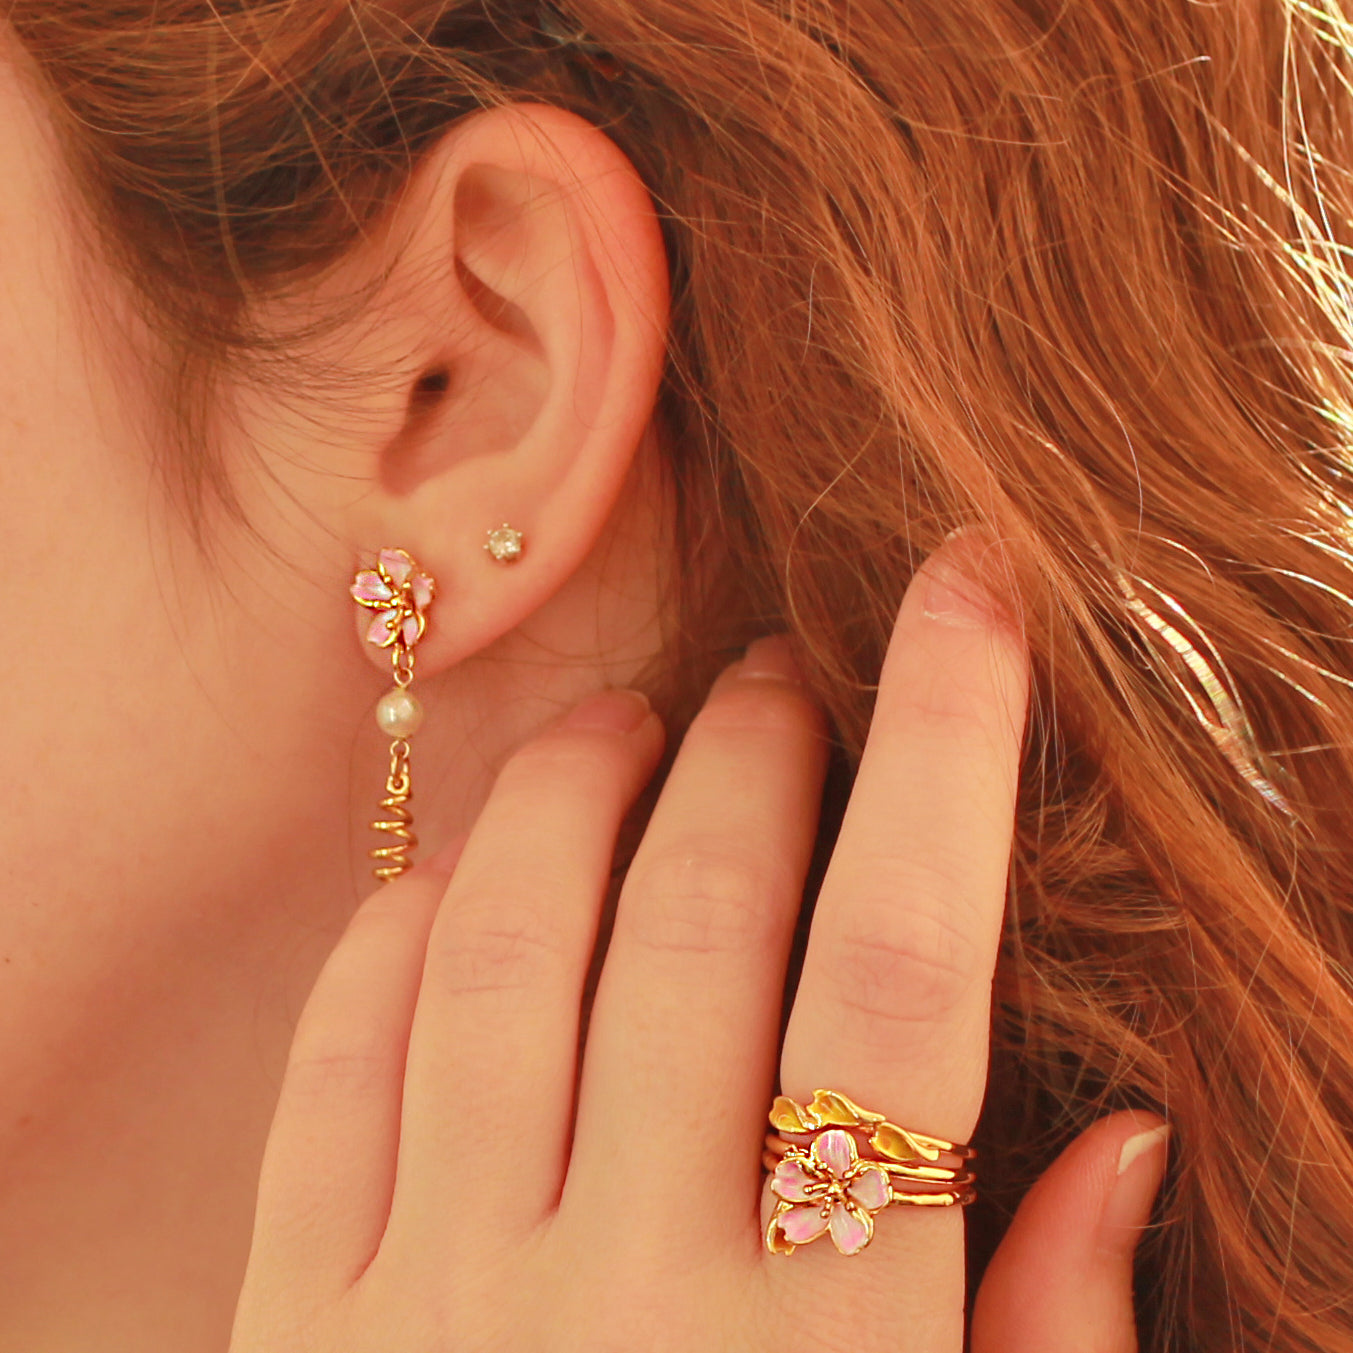 sakura earrings and ring